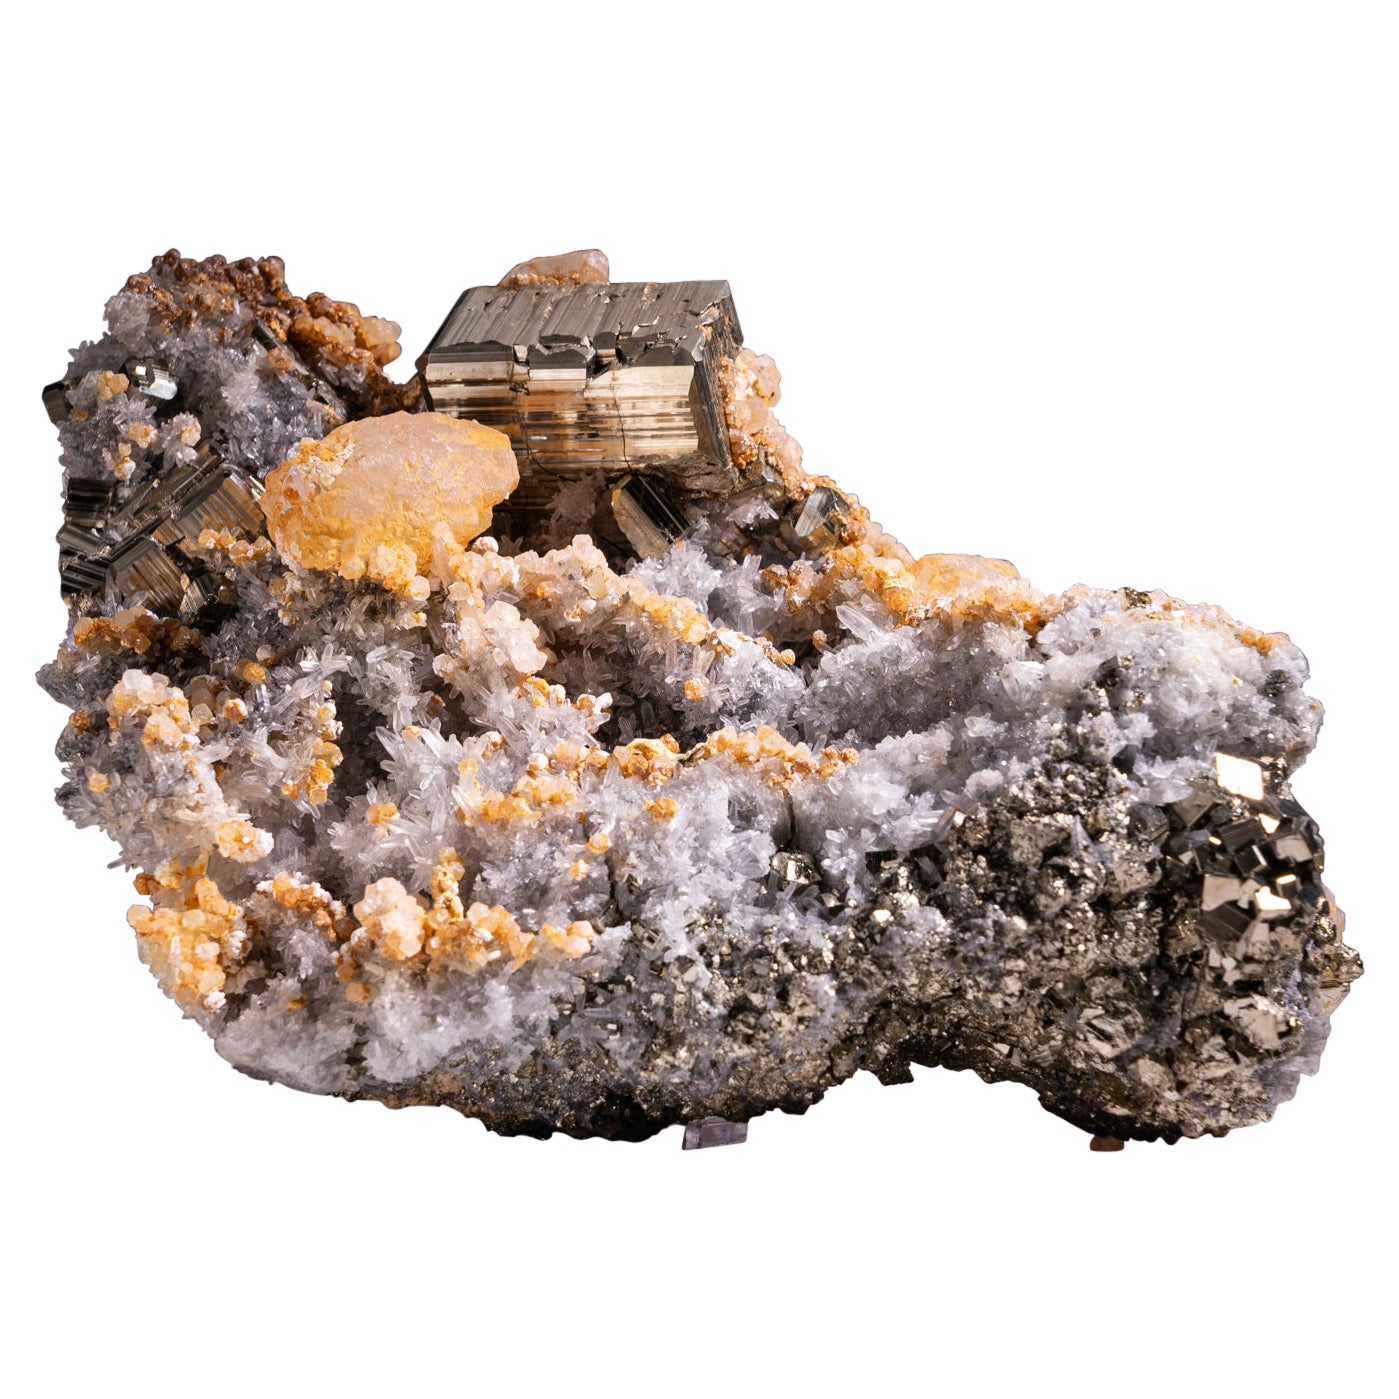 Calcite on Pyrite with Quartz from Huaron District, Cerro de Pasco Province Peru For Sale